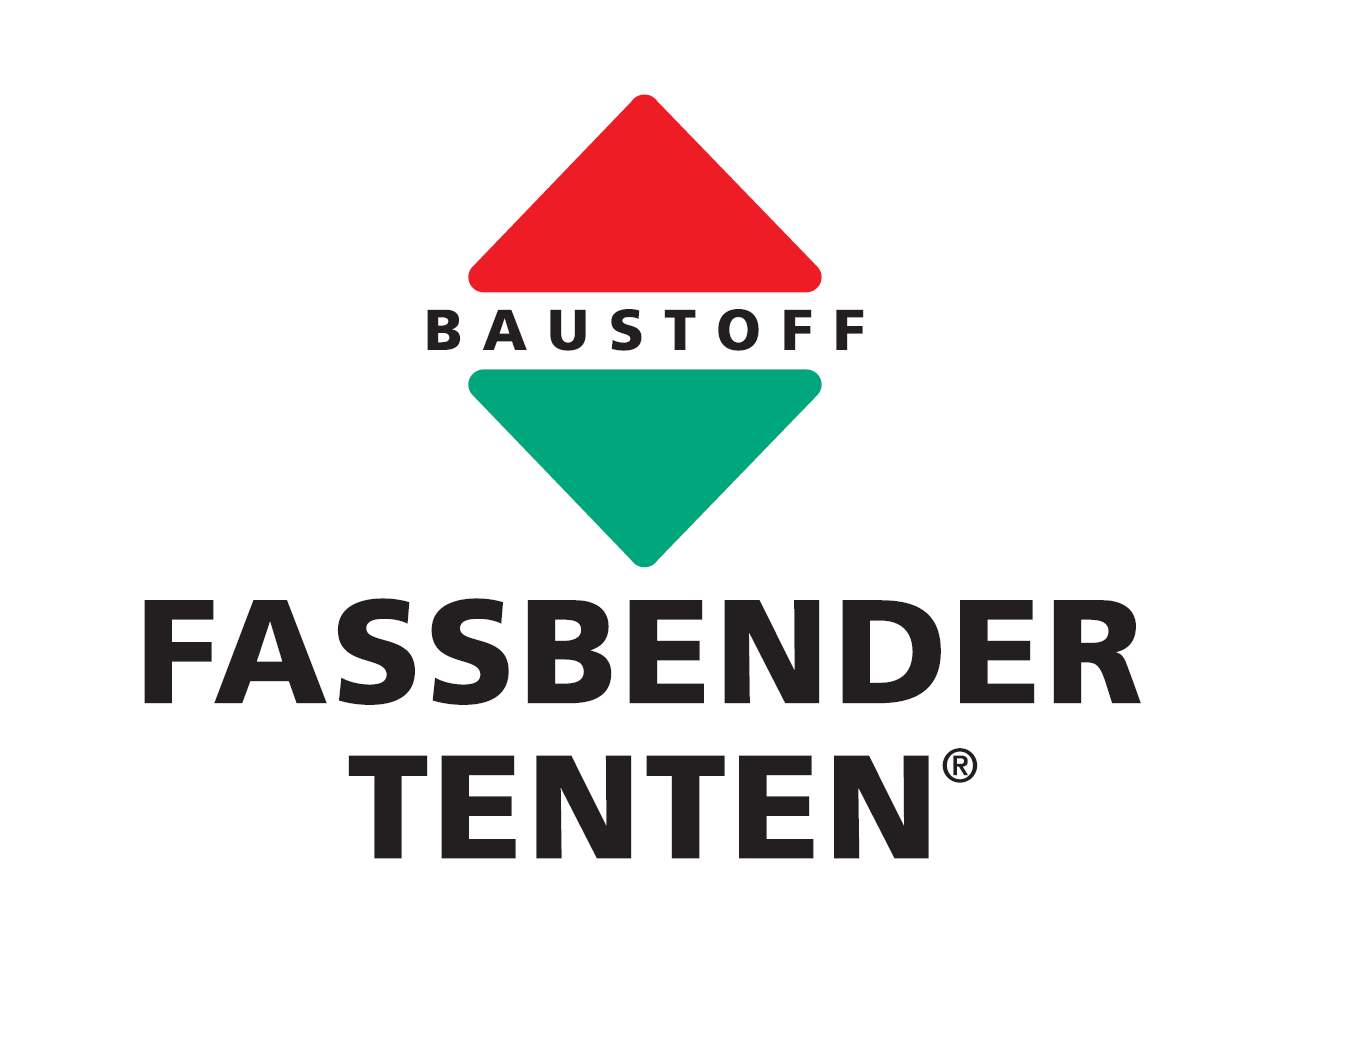 Faßbender Tenten GmbH & Co. KG